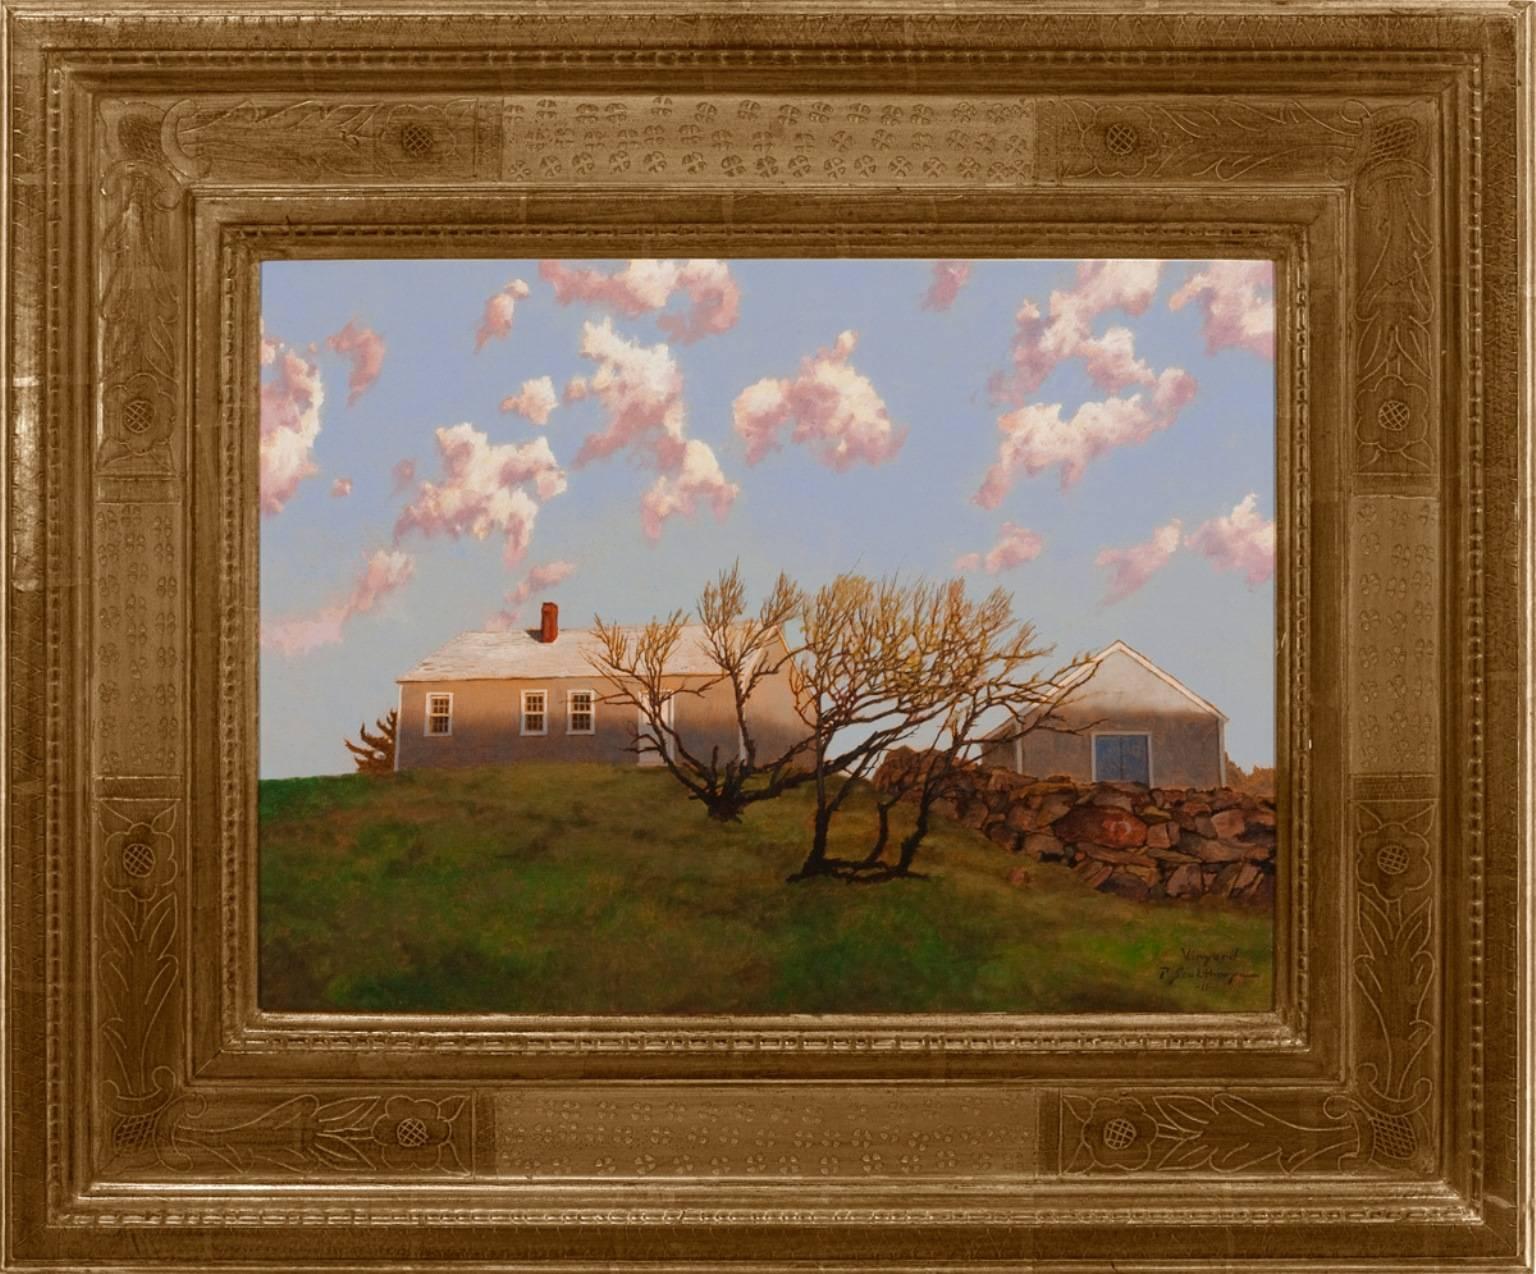 Peter Sculthorpe Landscape Painting - "Morning at Menemsha"